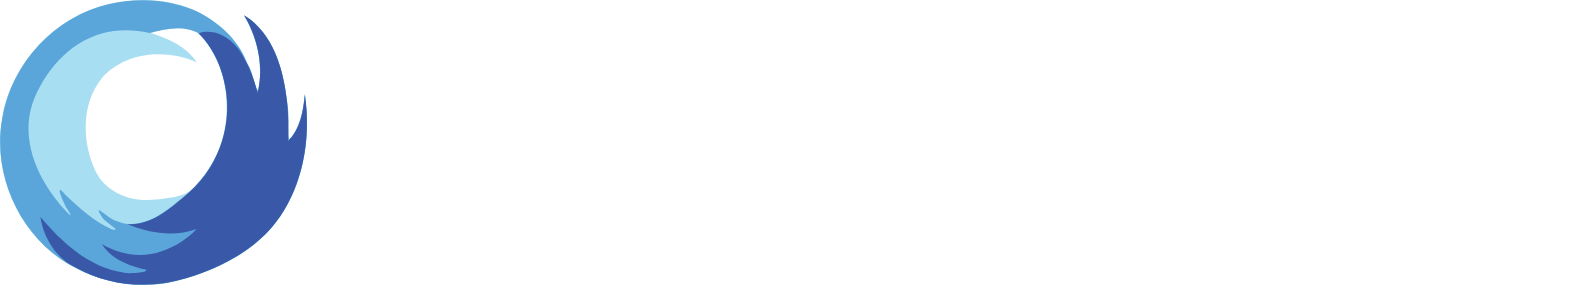 Pure Cycle (water) Logo groß für dunkle Hintergründe (transparentes PNG)